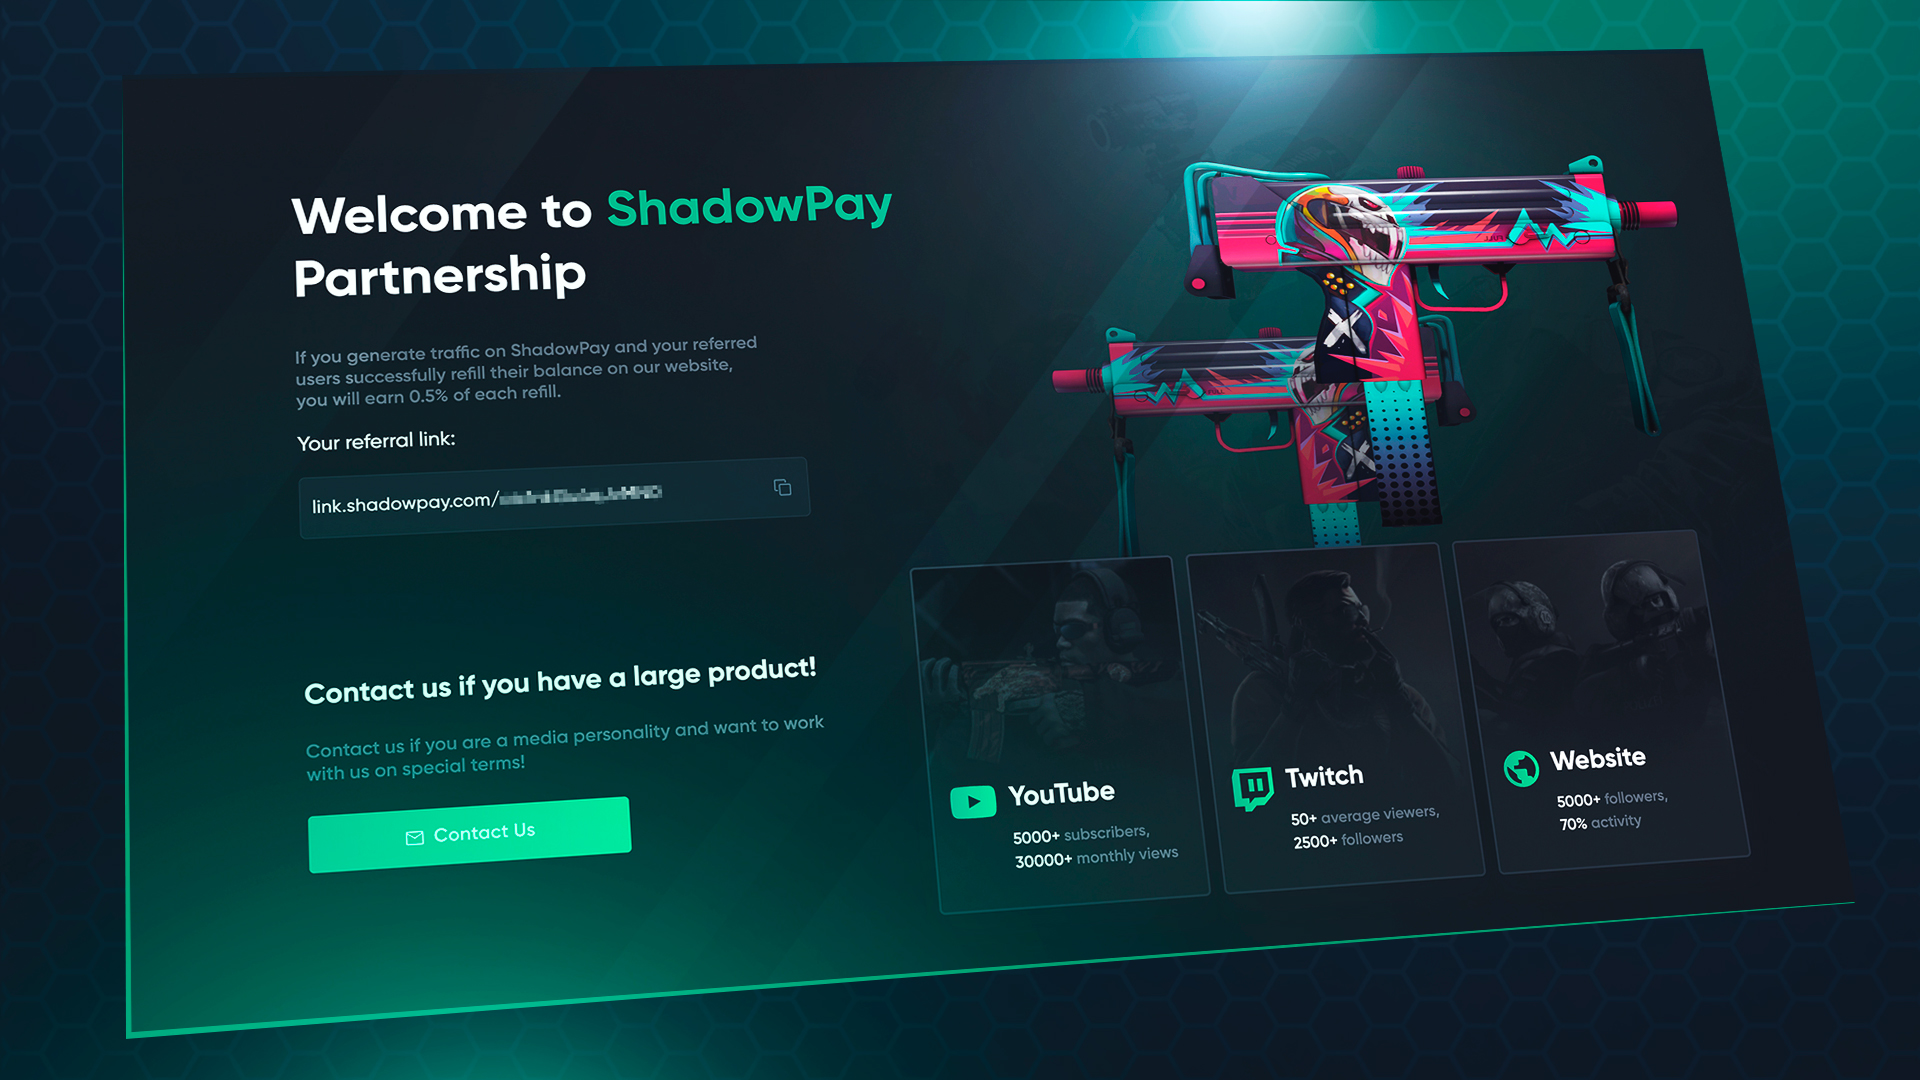 Shadowpay.com $25 Pre-paid Card